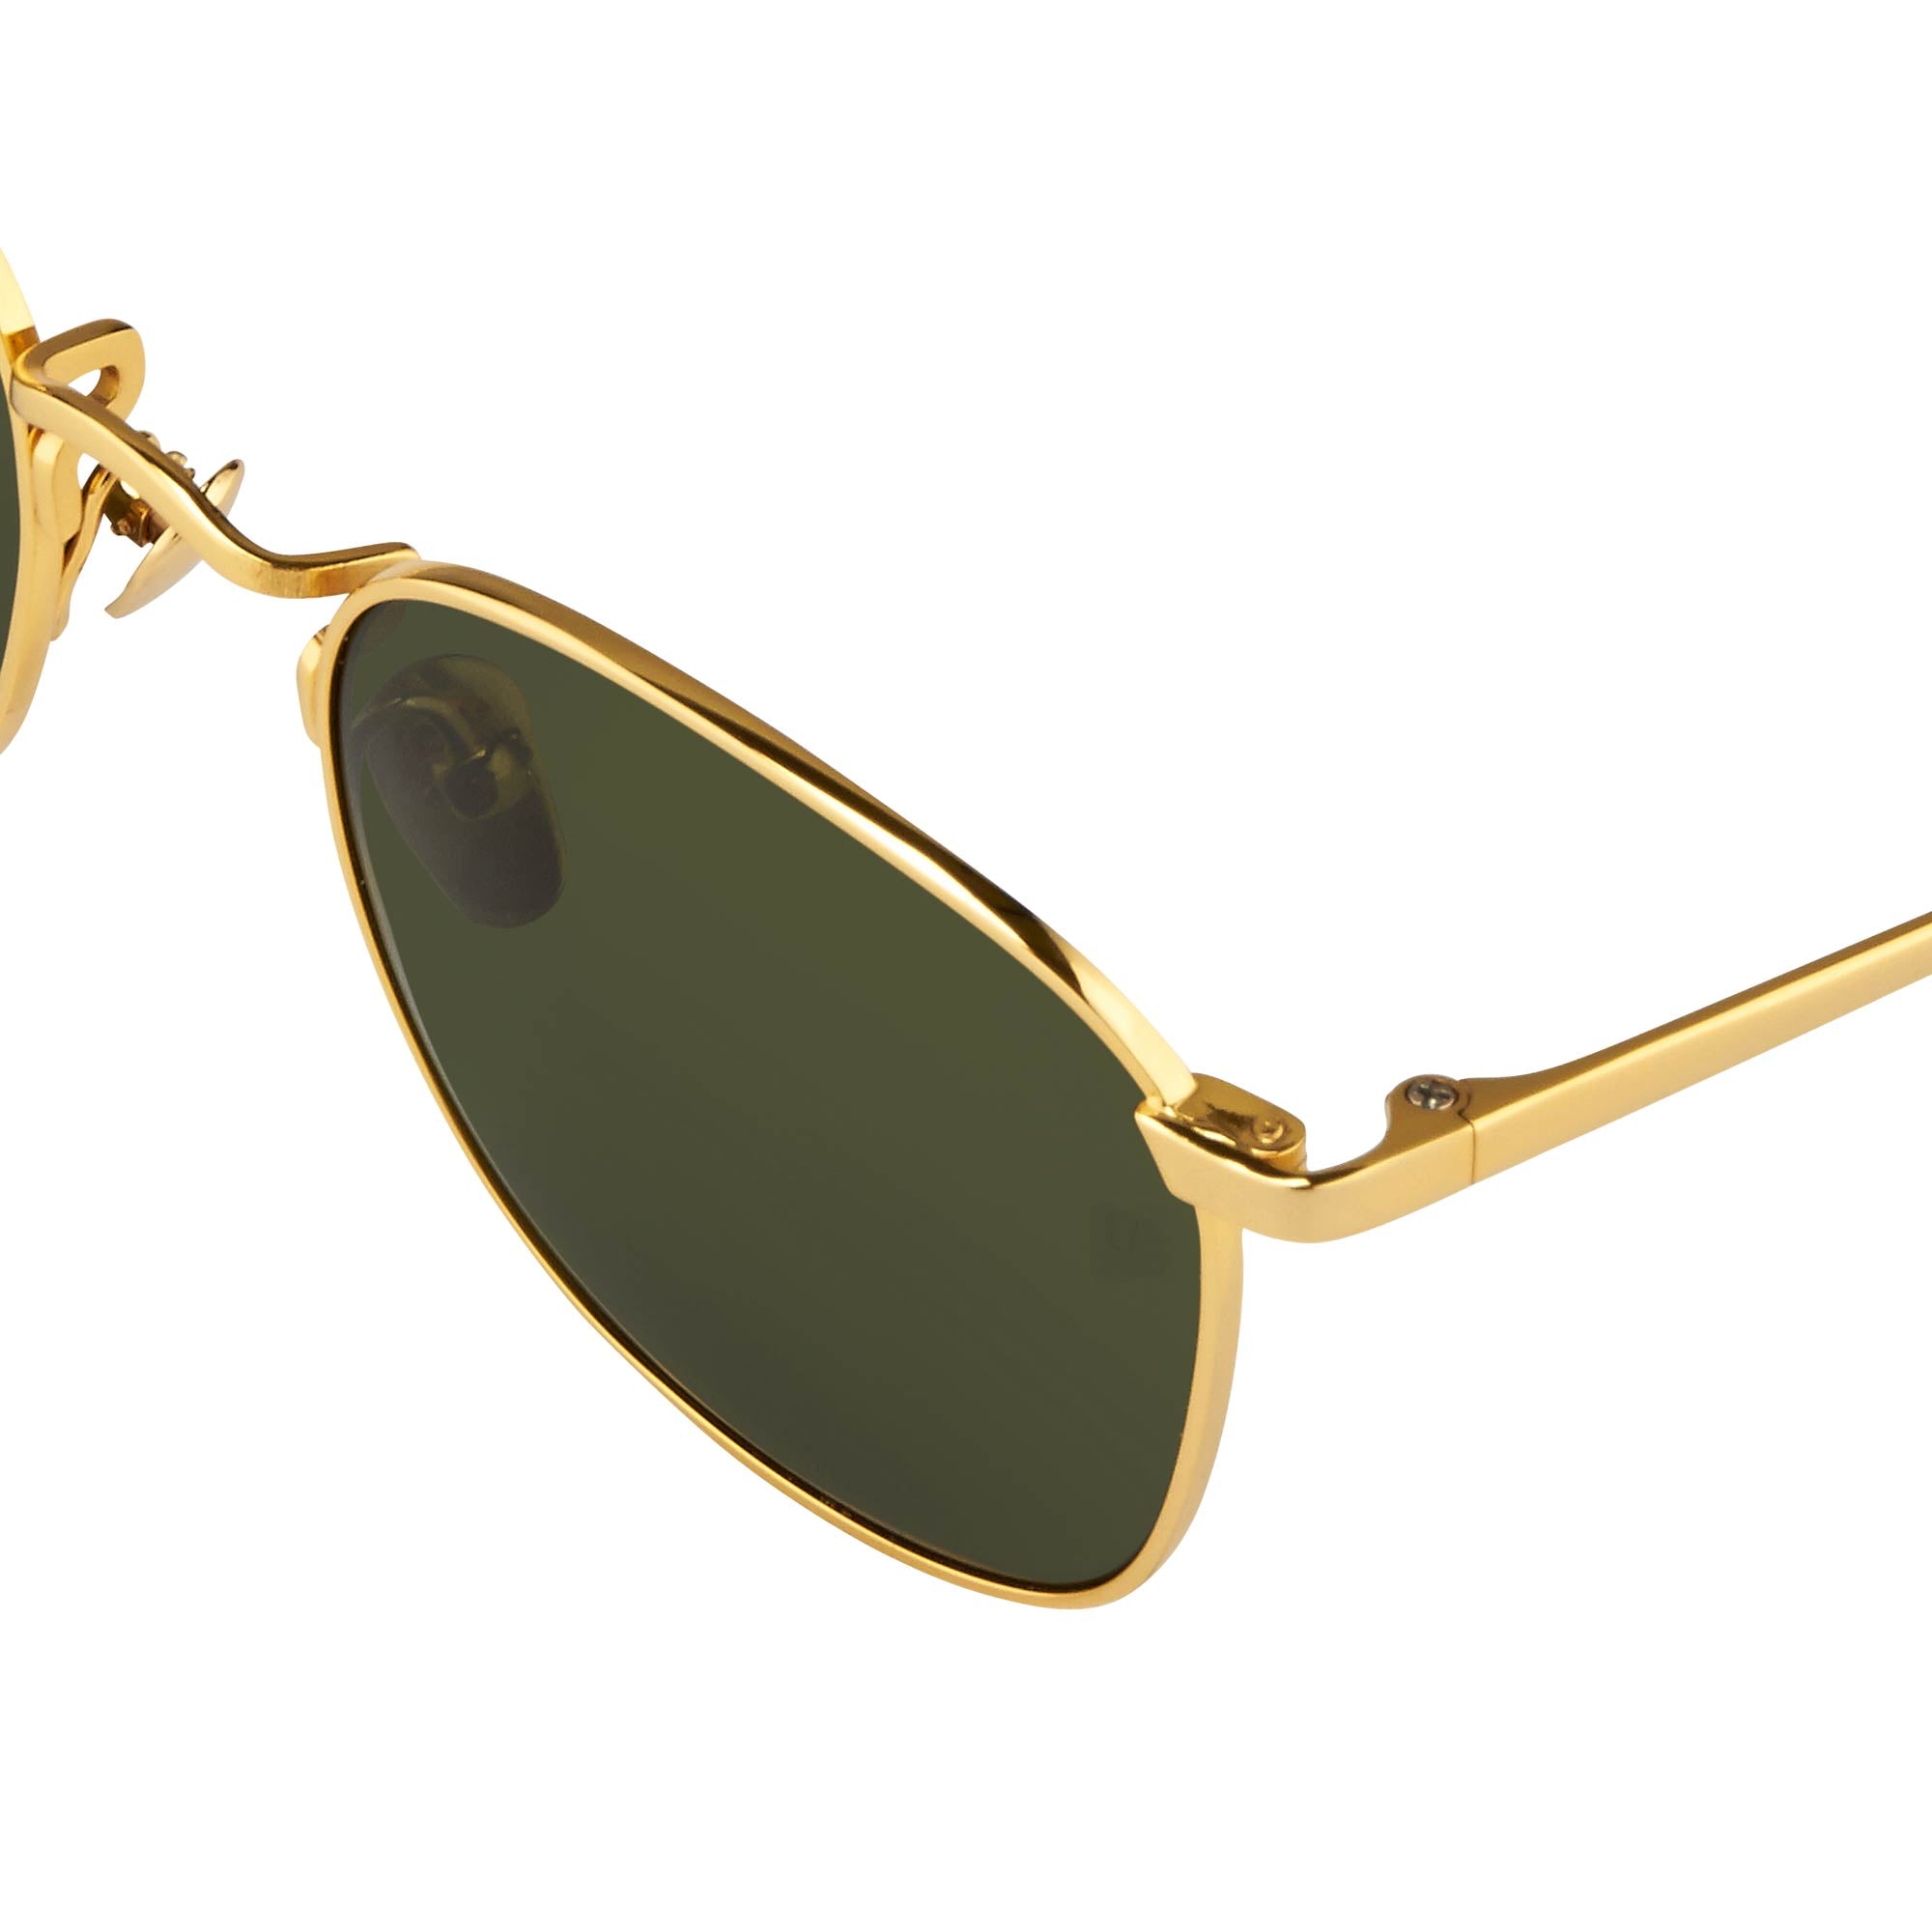 Simon Square Sunglasses Frame in Rose Gold by LINDA FARROW – LINDA FARROW  (INT'L)